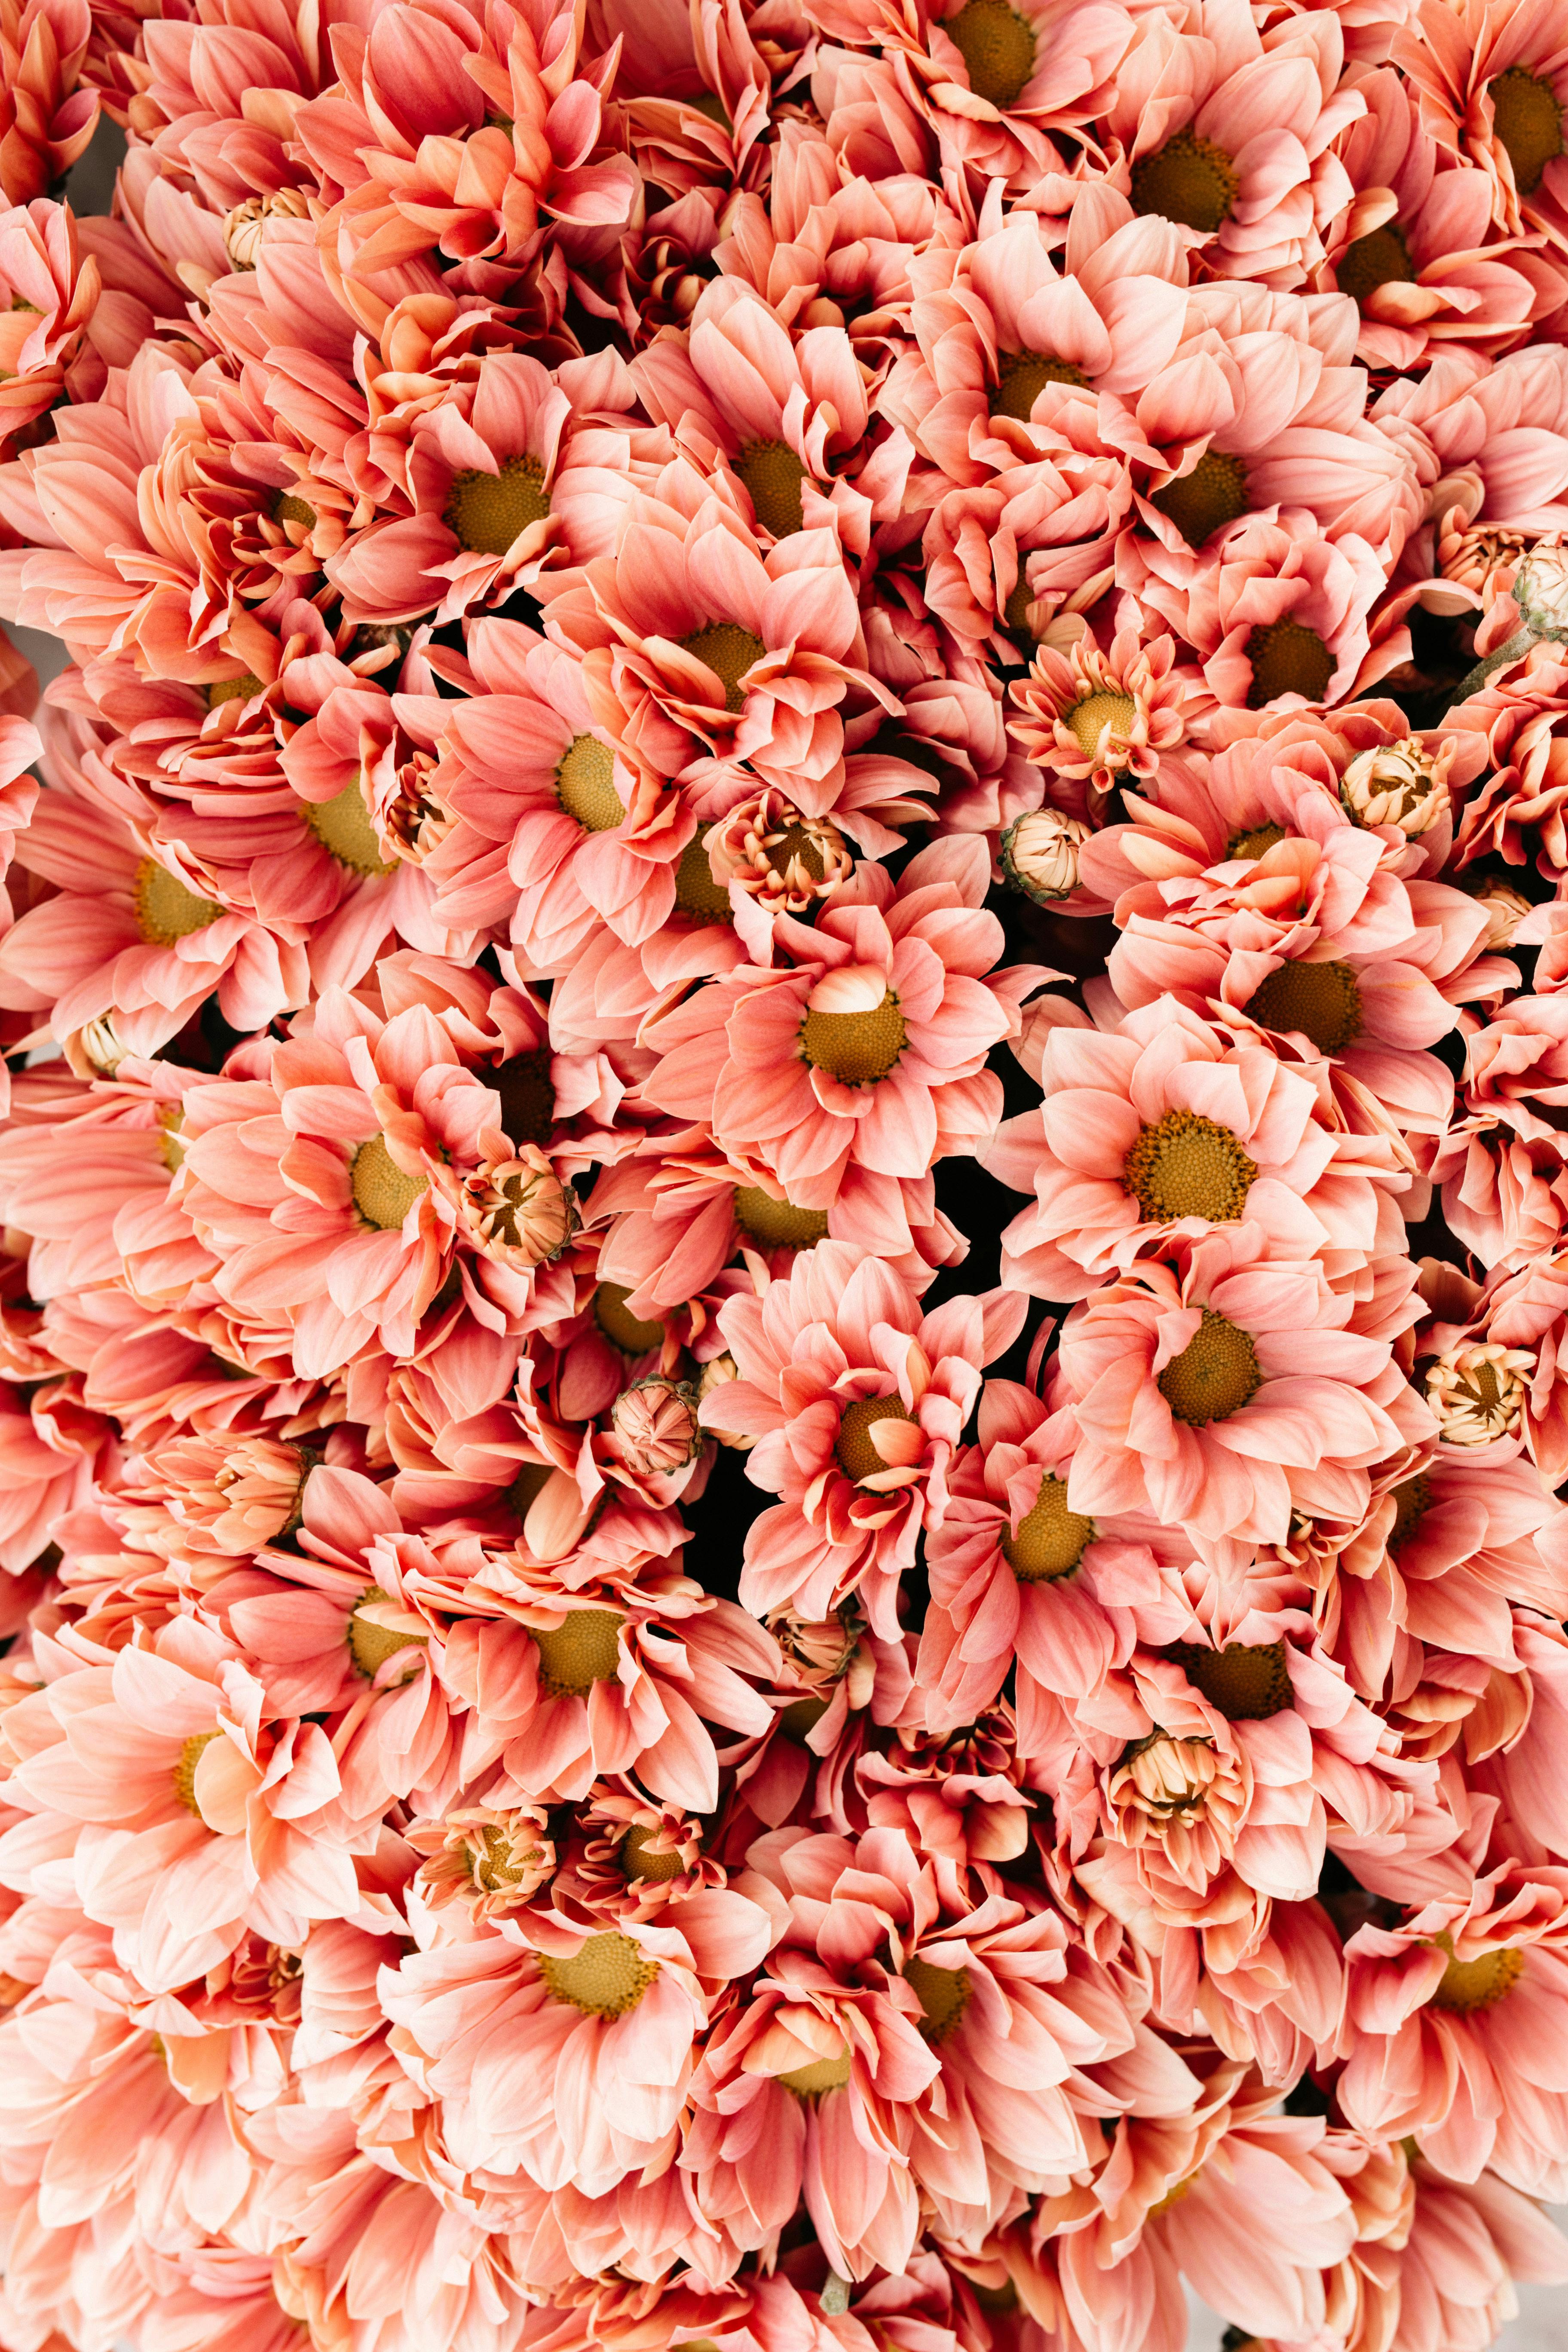 flowers tumblr background